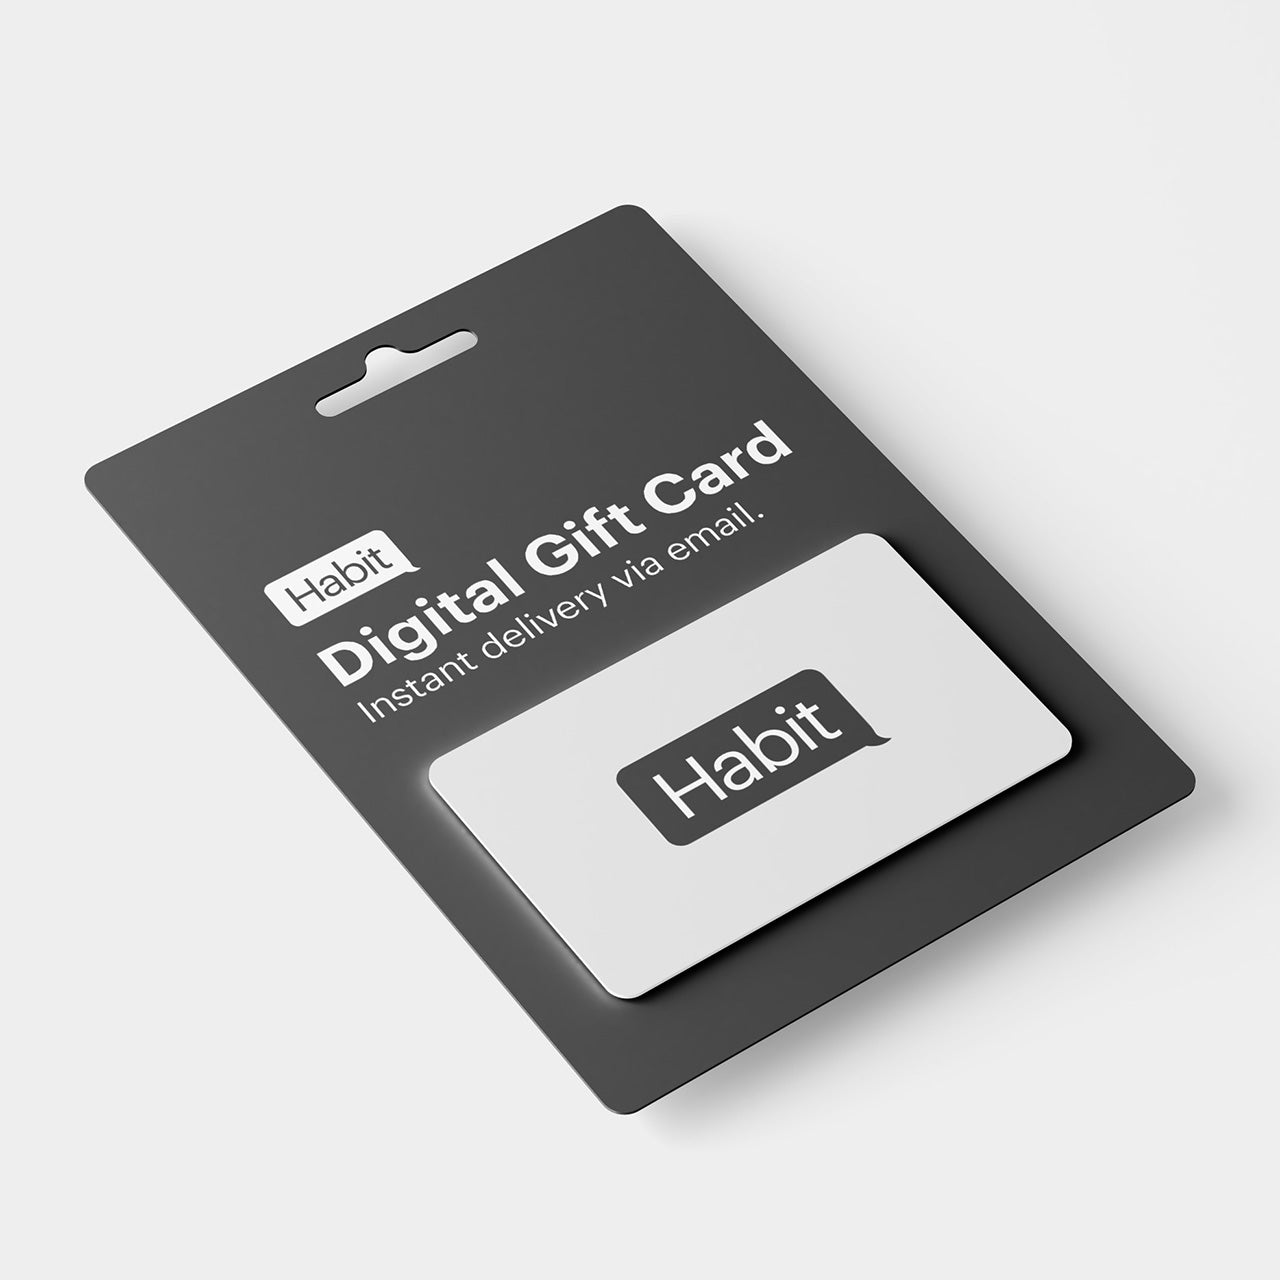 Habit Digital Gift Card